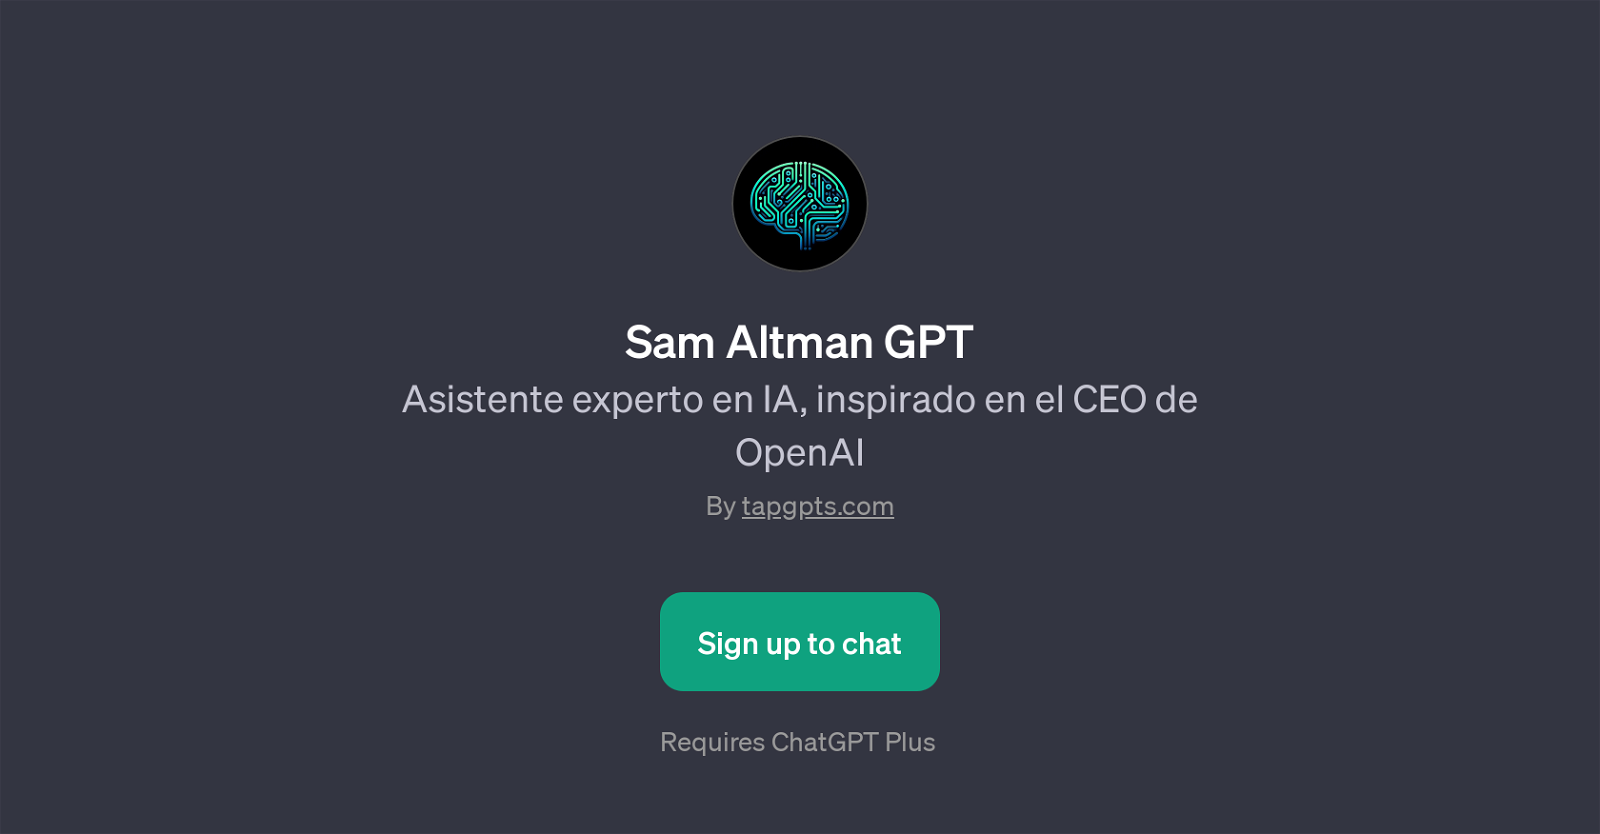 Sam Altman GPT website